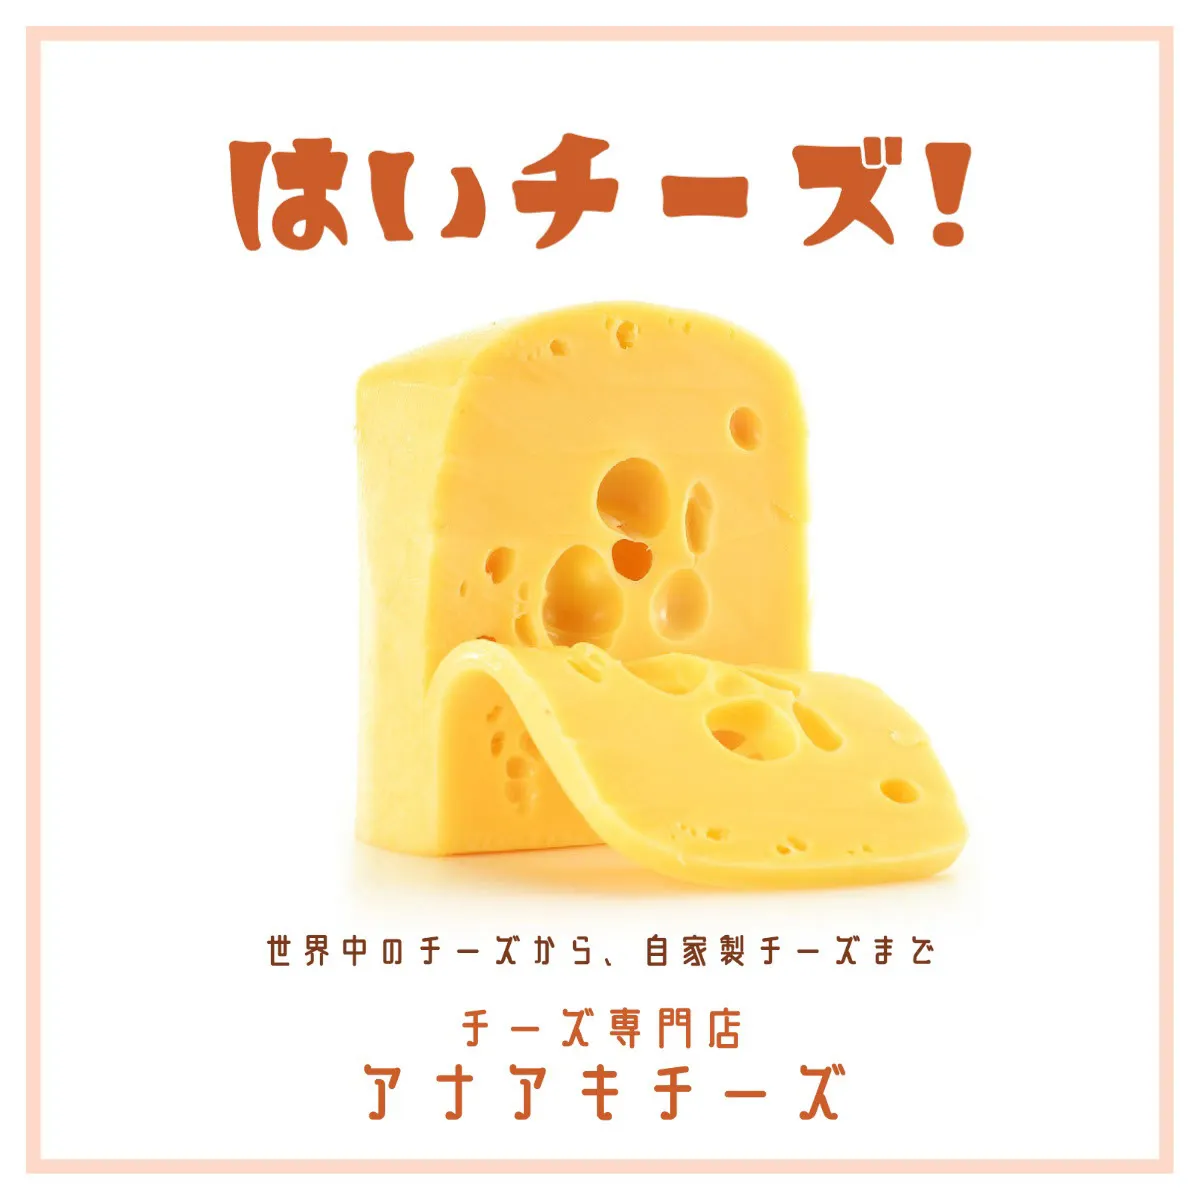 Yellow cheese facebook advertisement